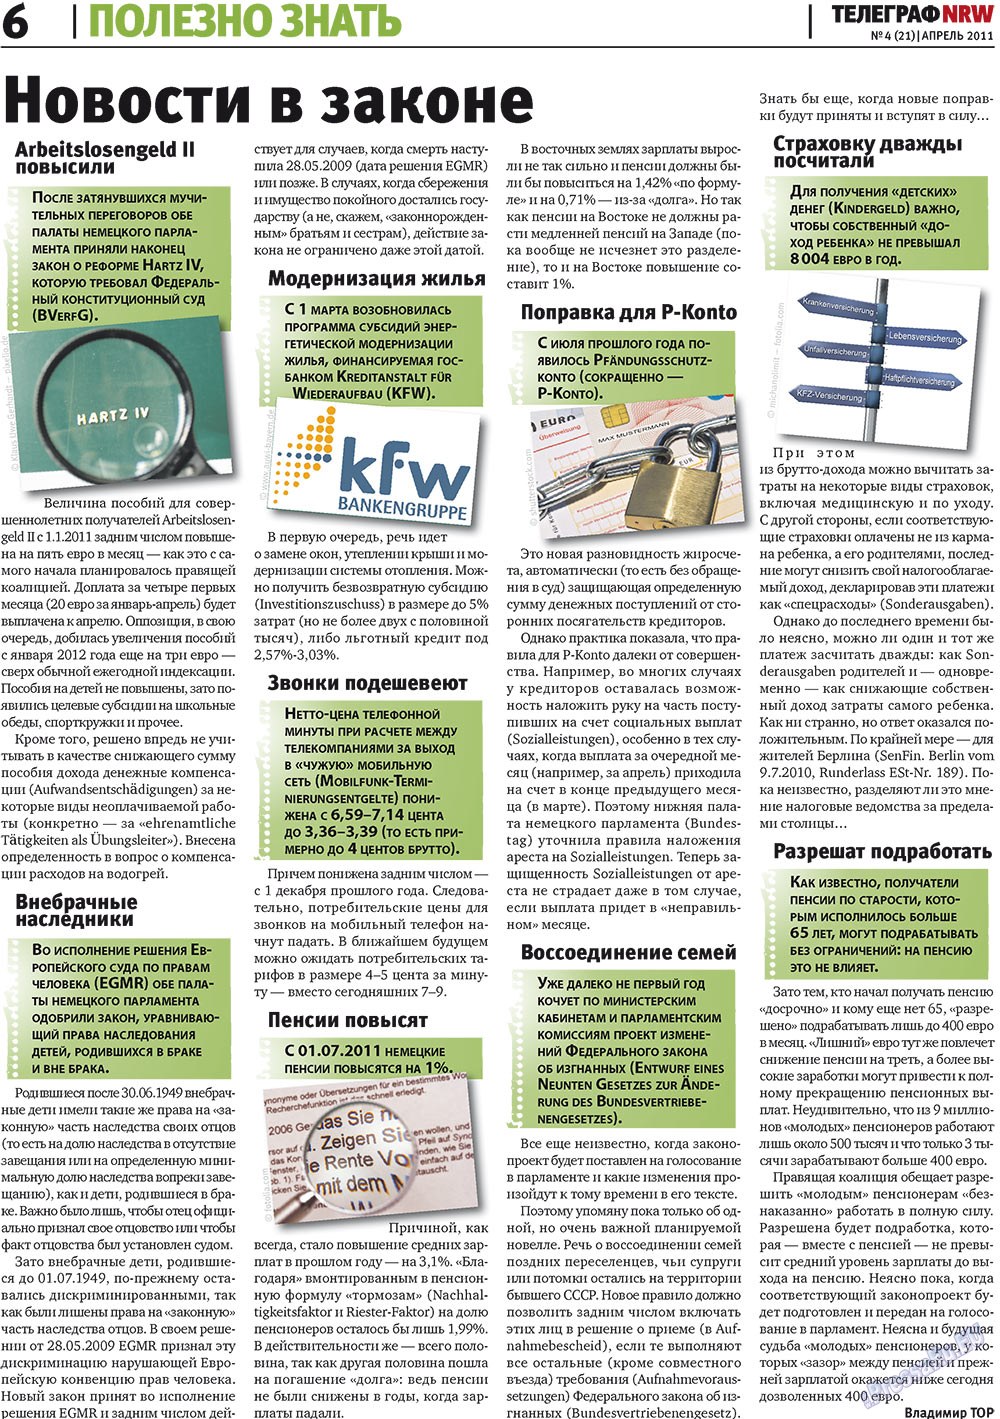 Телеграф NRW, газета. 2011 №4 стр.6